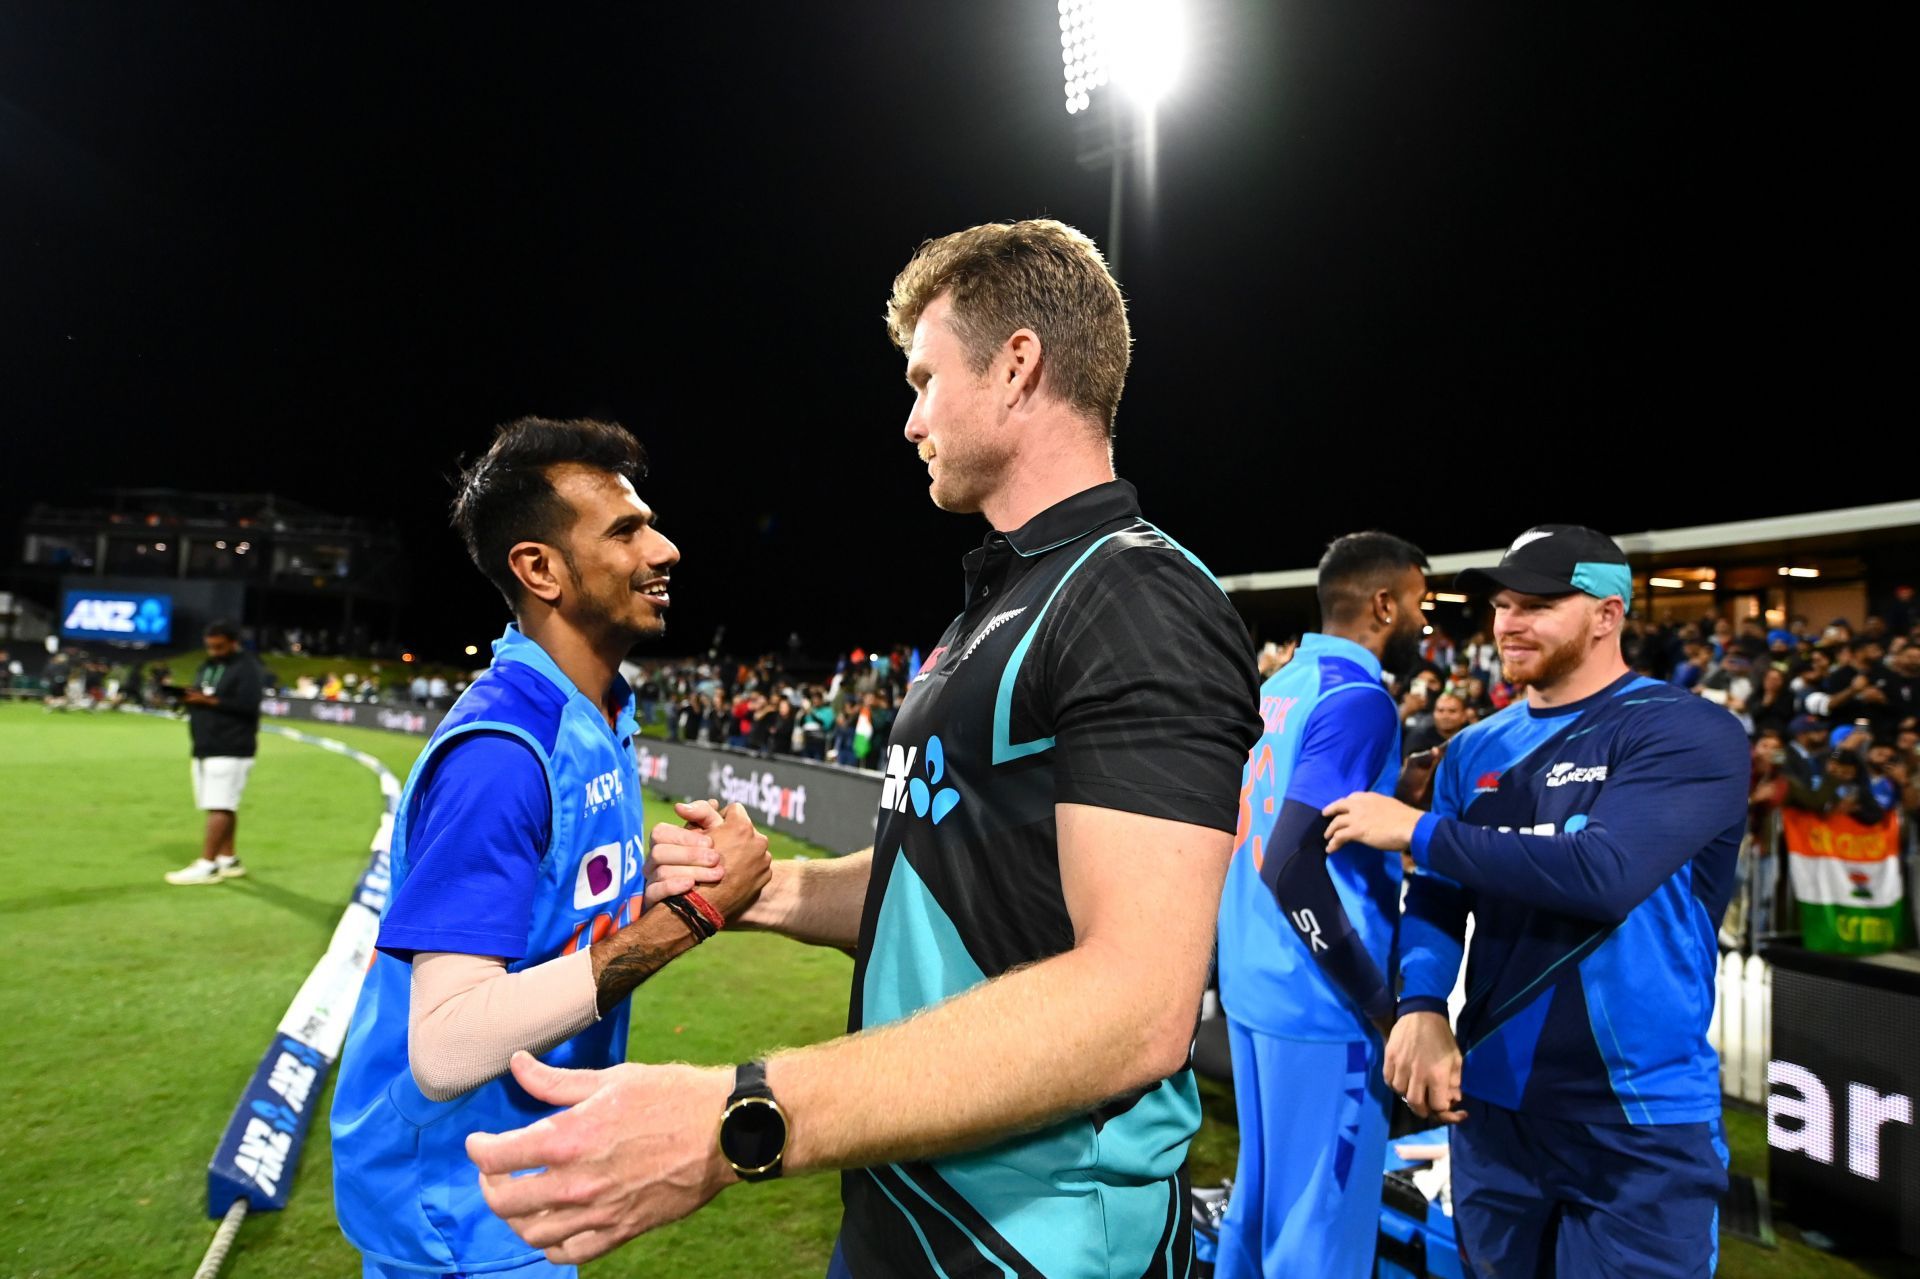 New Zealand v India - 2nd T20